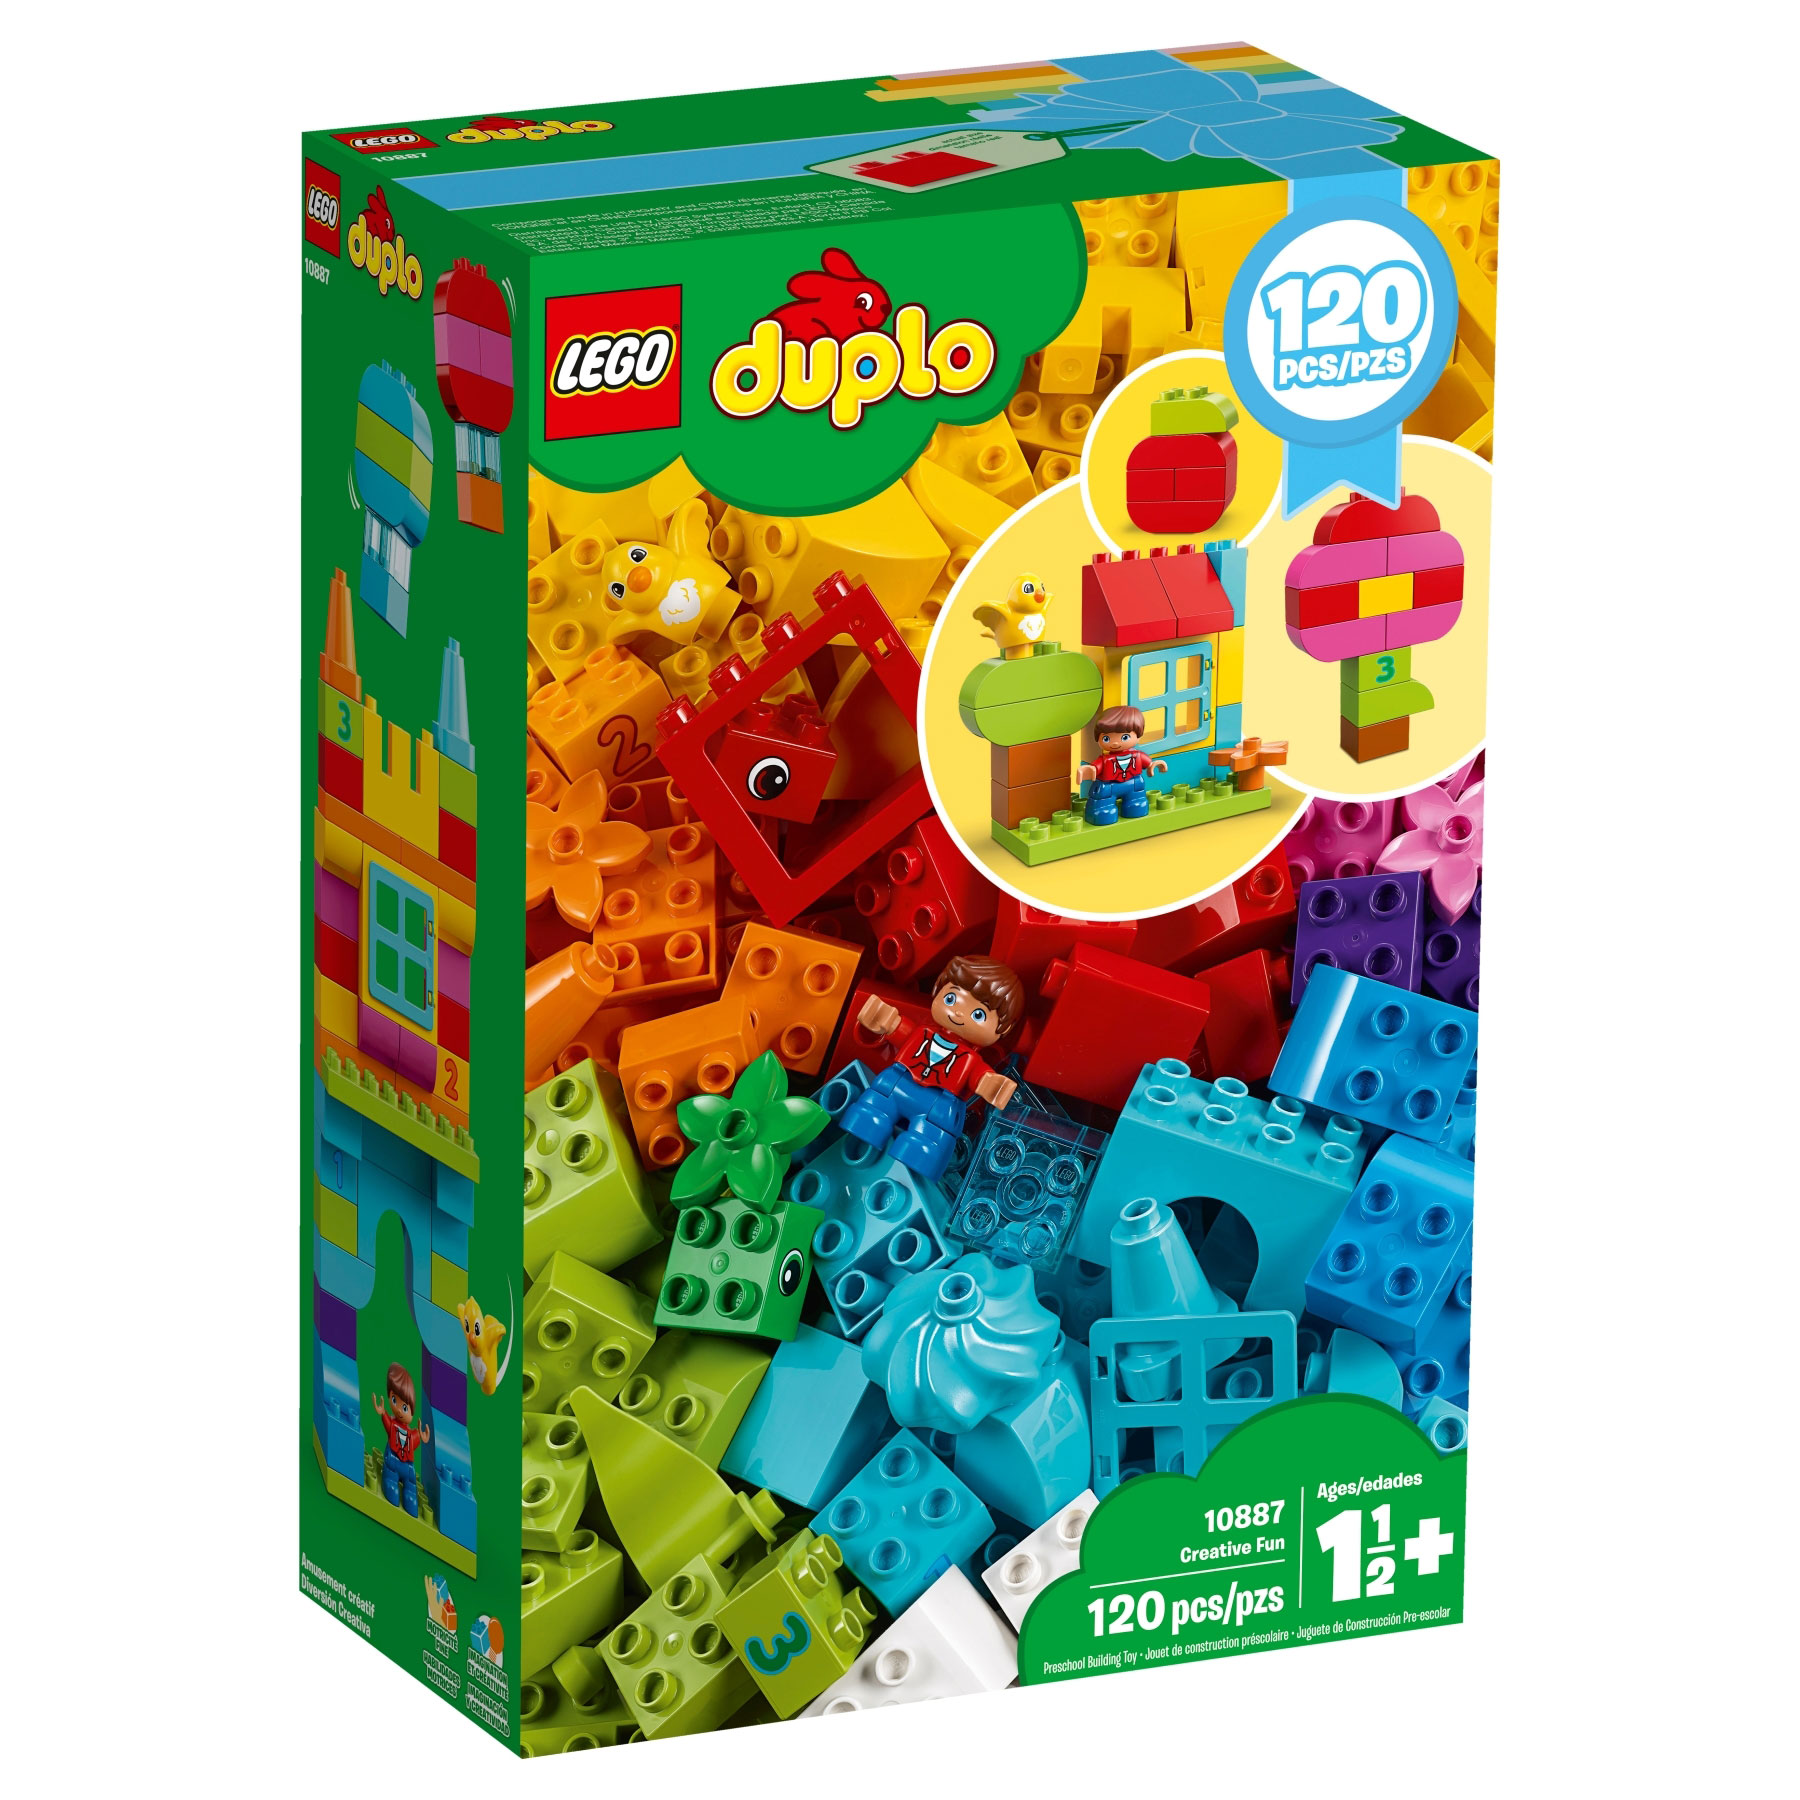 LEGO DUPLO 10887 Creative Fun Ideas Block Building Set for Toddlers (120 Pieces) 673419301848 | eBay